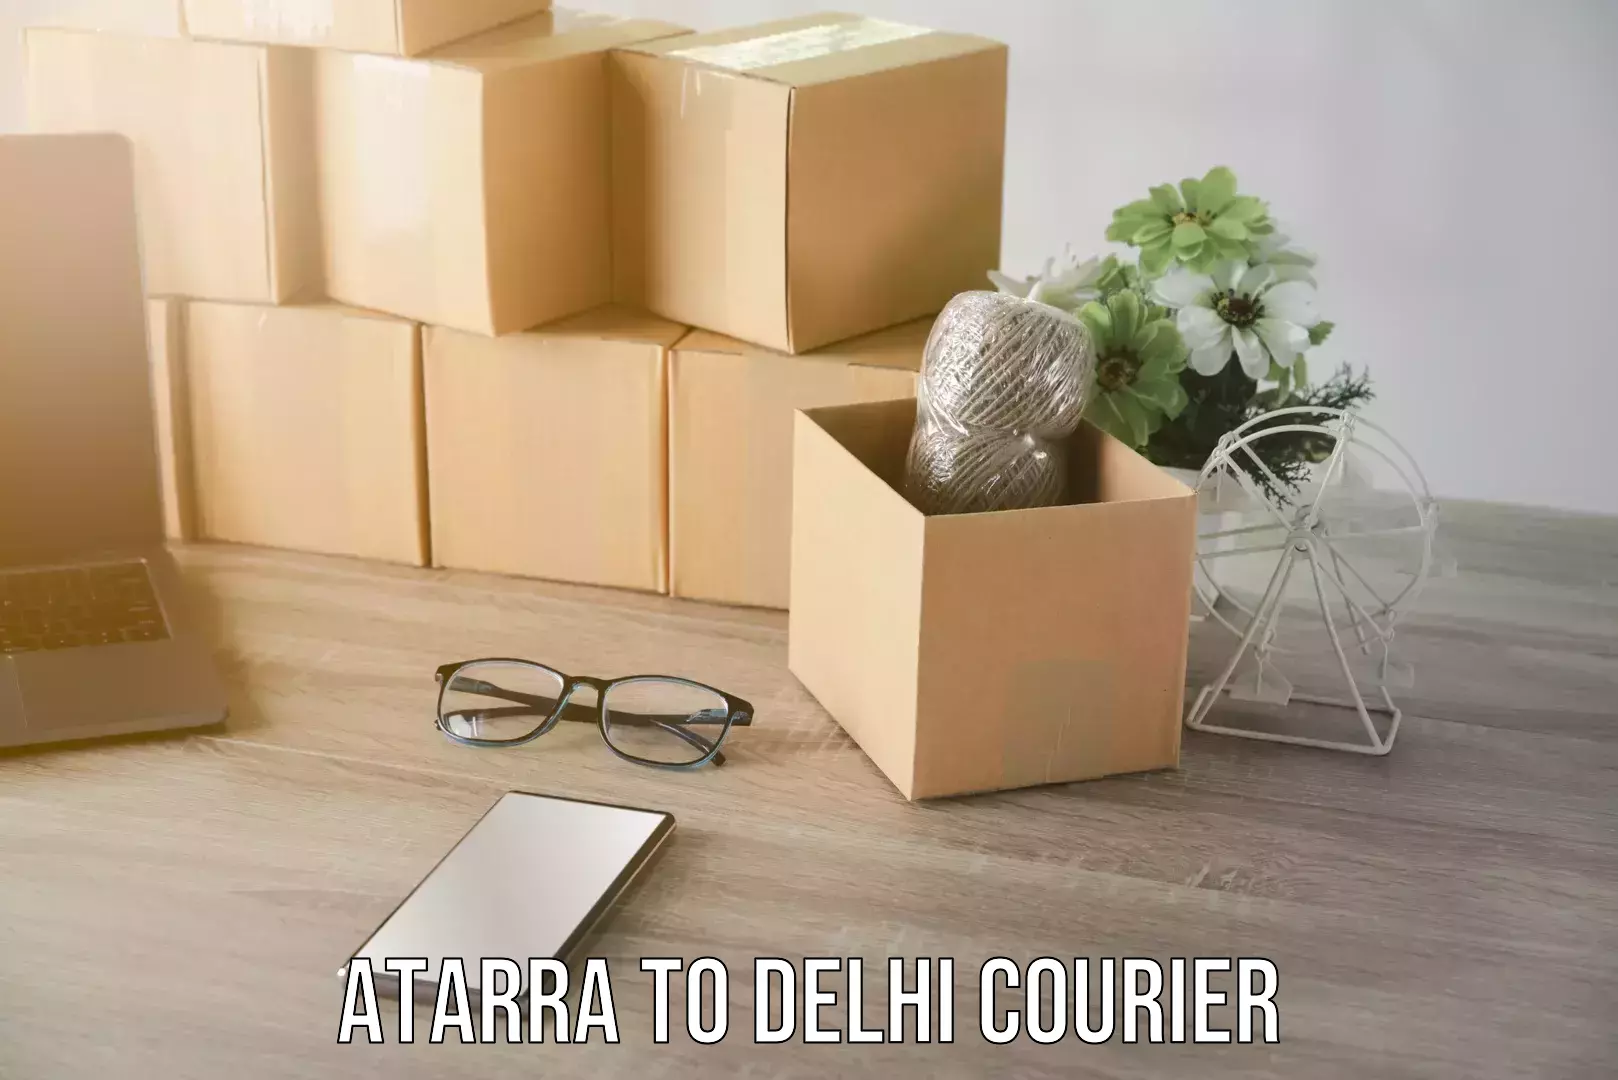 Courier service innovation Atarra to Delhi